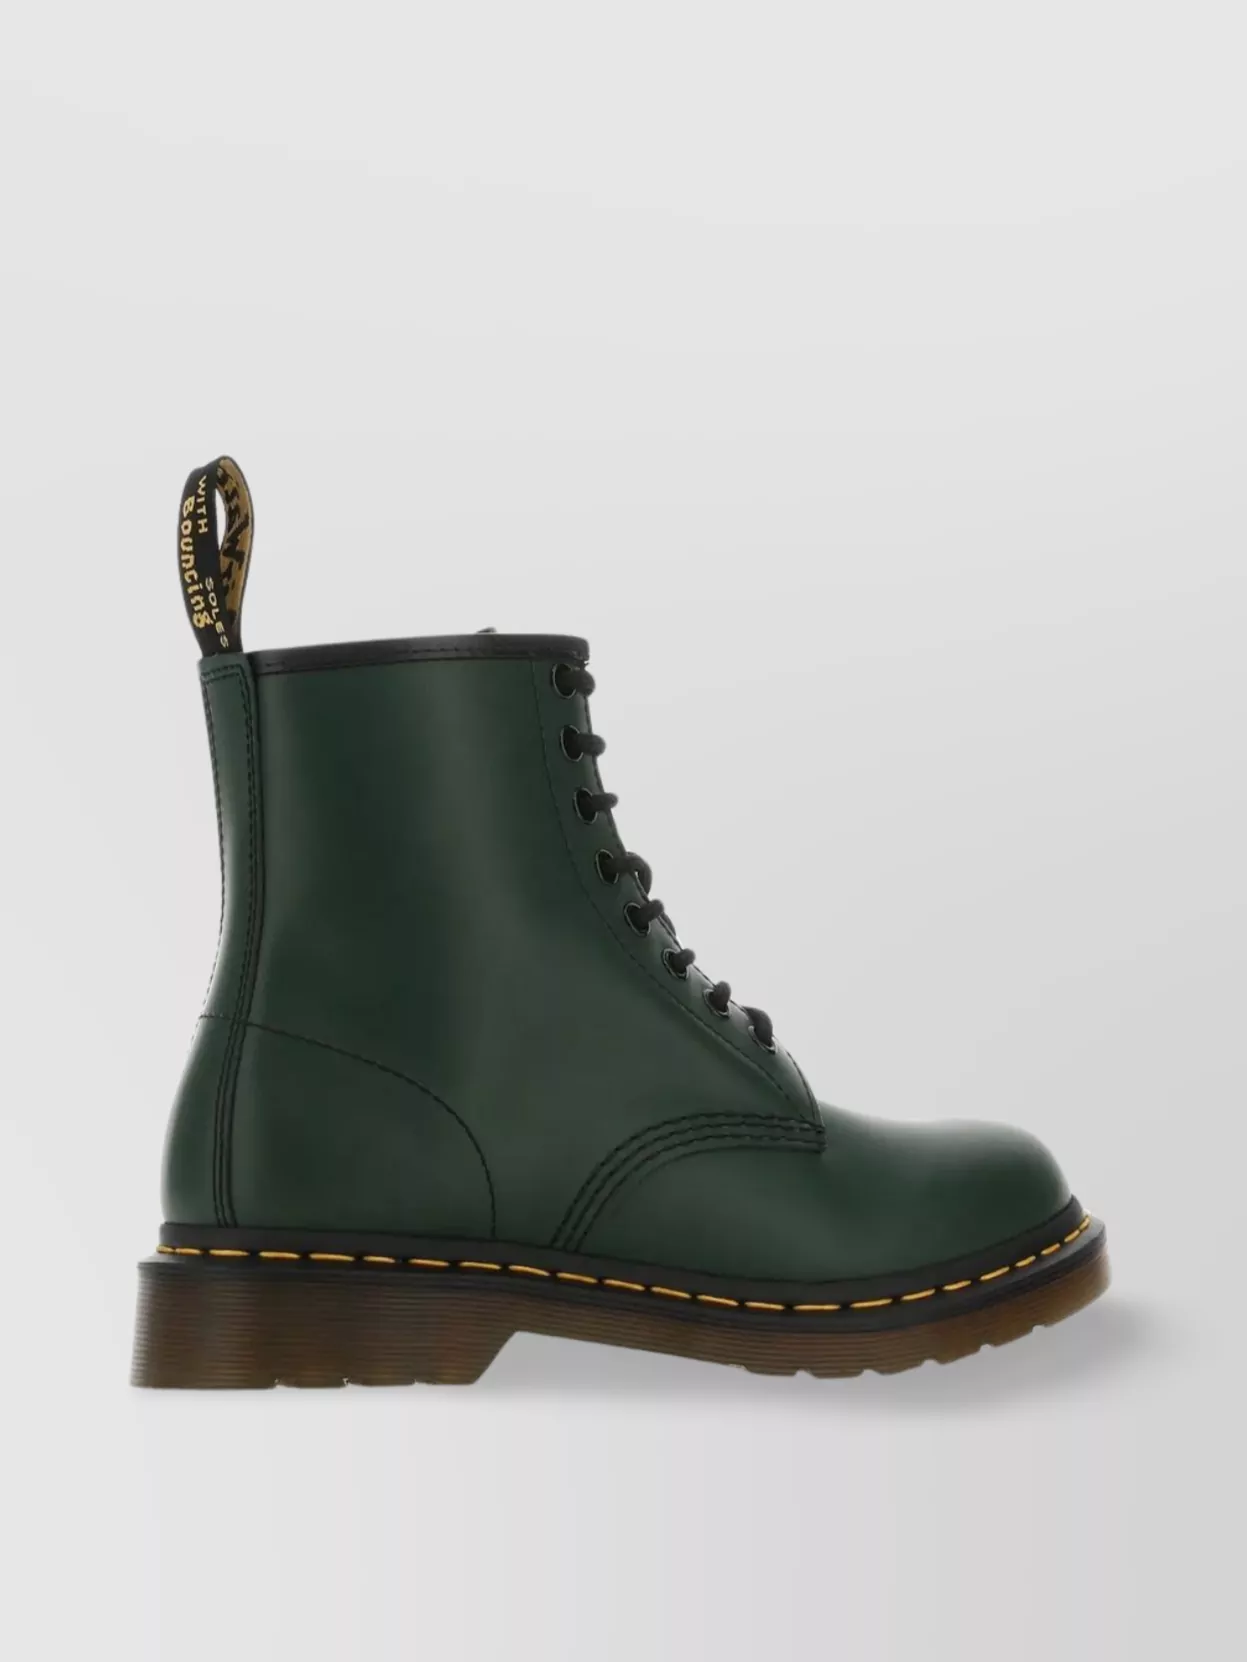 Shop Dr. Martens' Leather Ankle Boots 1460